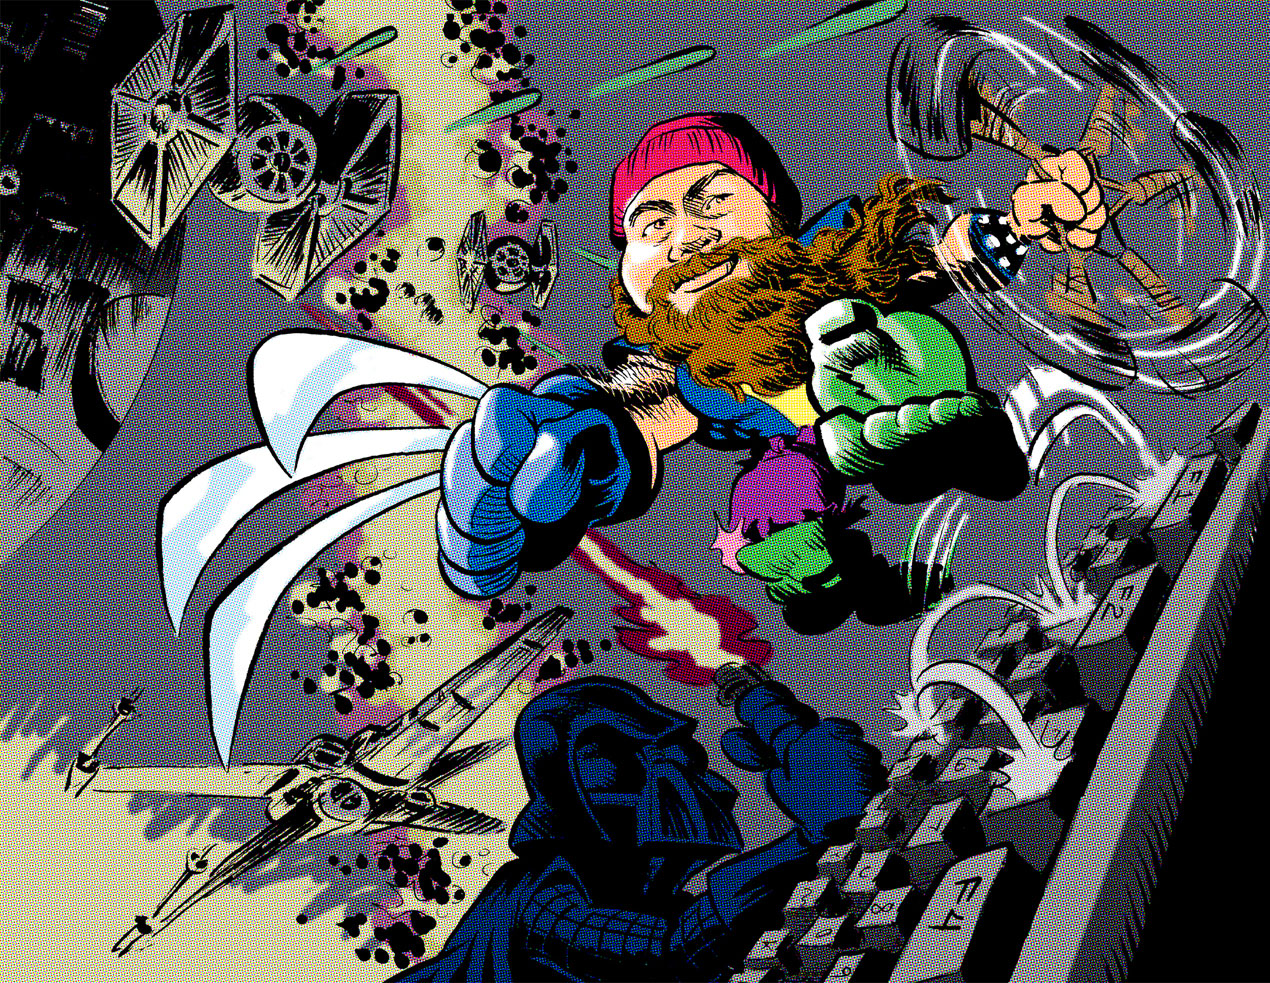 Illustration of Jason Aaron as combination of superheroes fighting Darth Vader on computer keyboard; illustration by Tim Rocks